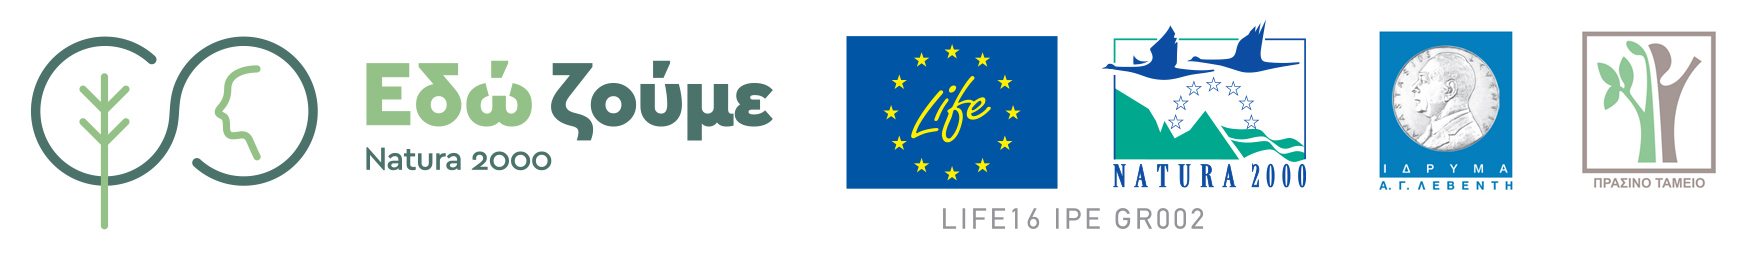 LIFE IP4NATURA logos all 5 funders